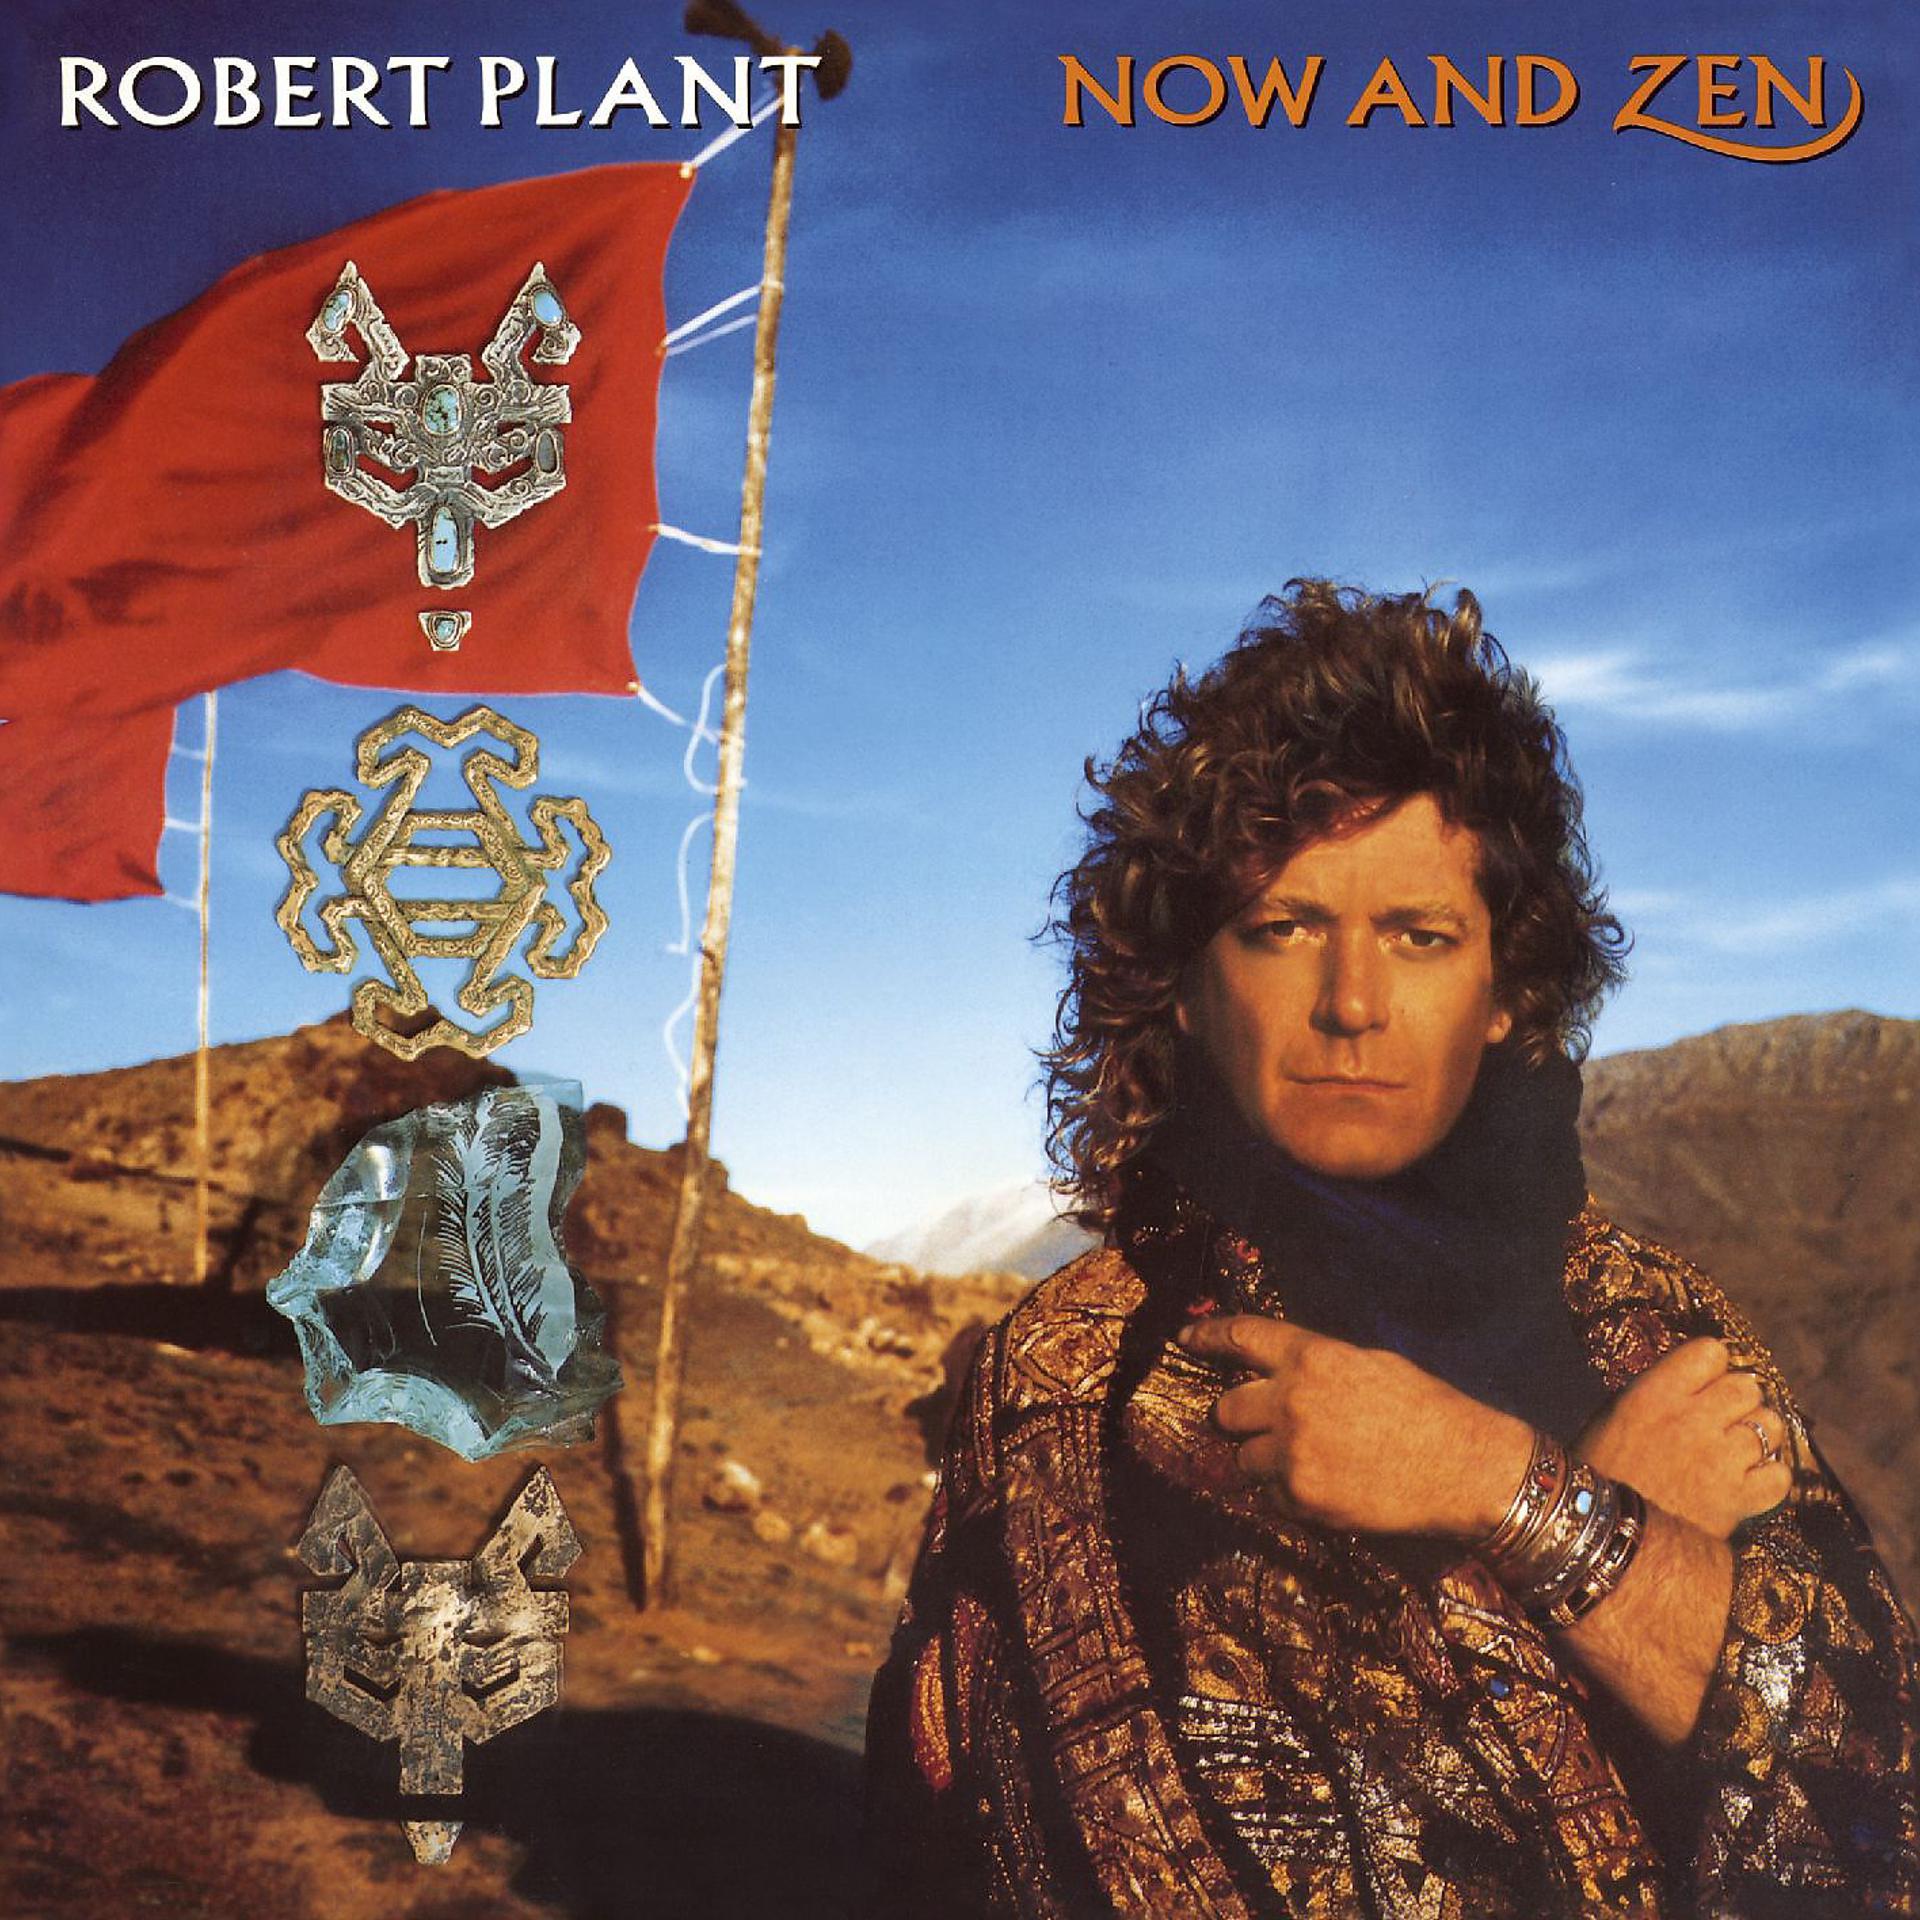 Robert Plant Now and Zen 1988. Robert Plant 1990. Robert Plant обложки фотоальбомов. Плант альбомы